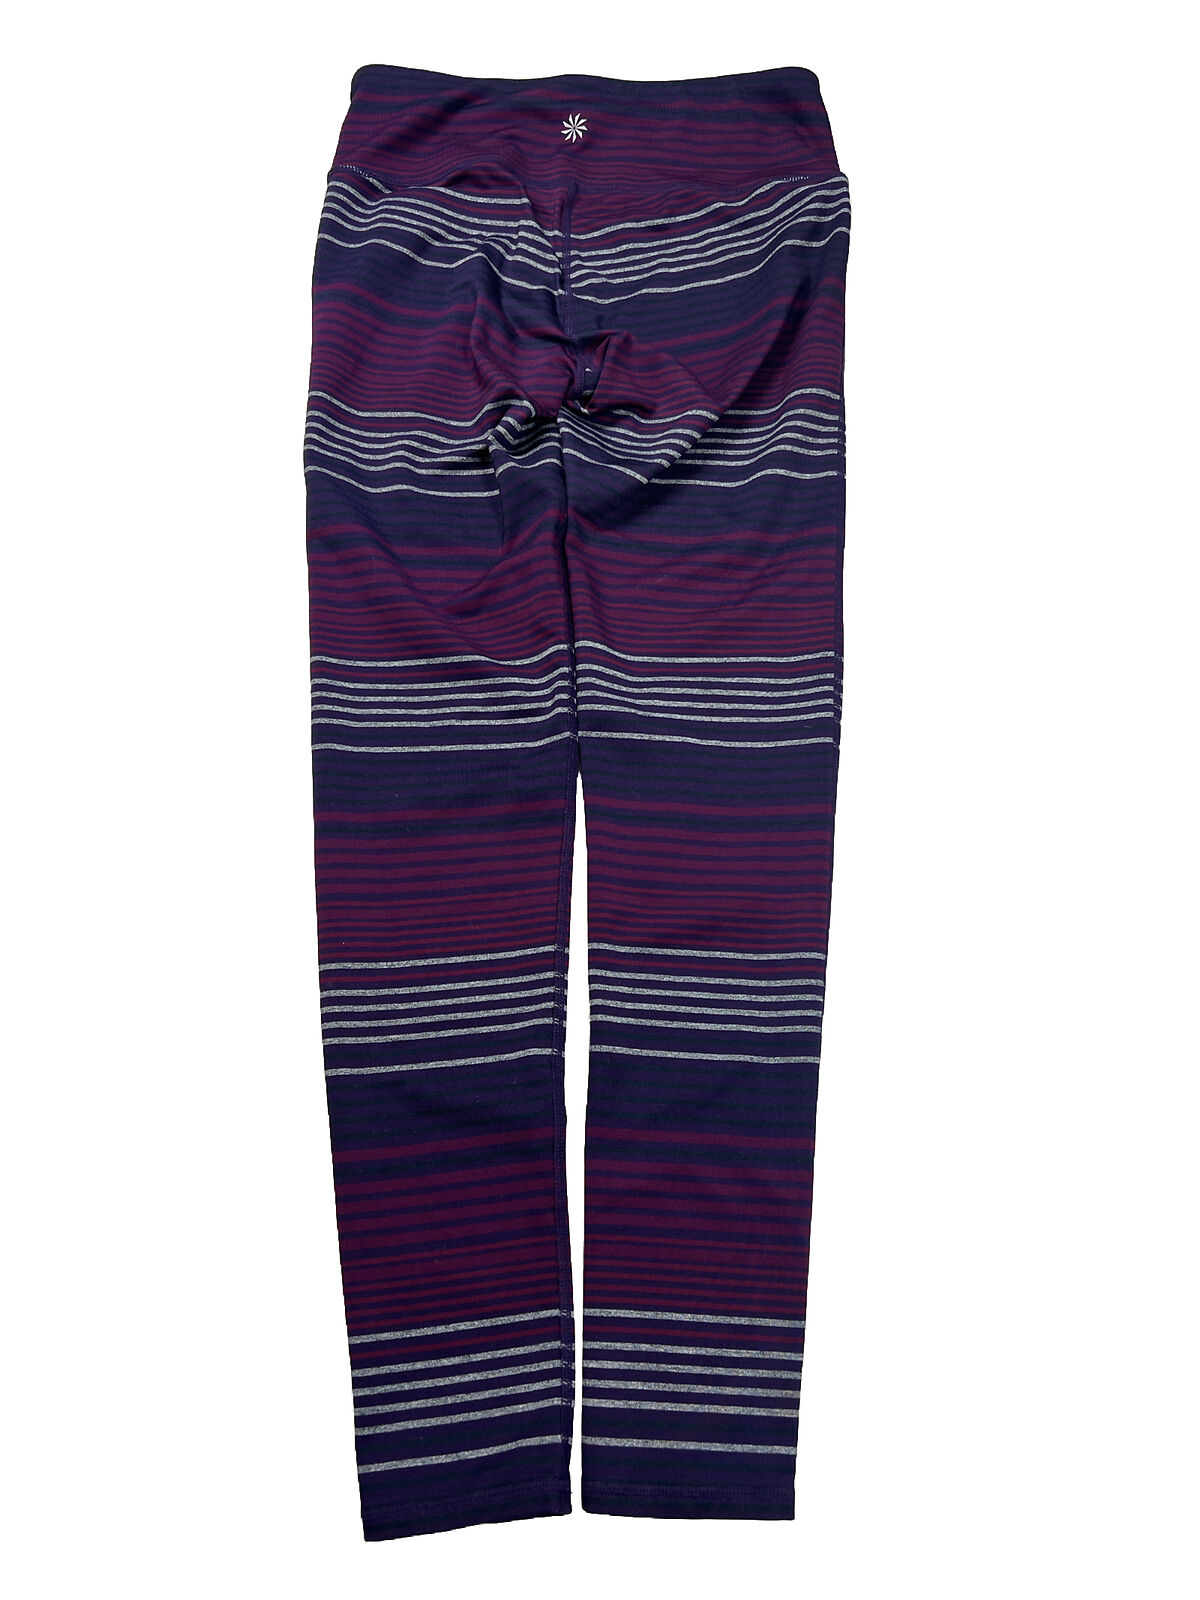 Athleta Women's Purple Striped Chaturanga Leggings - S